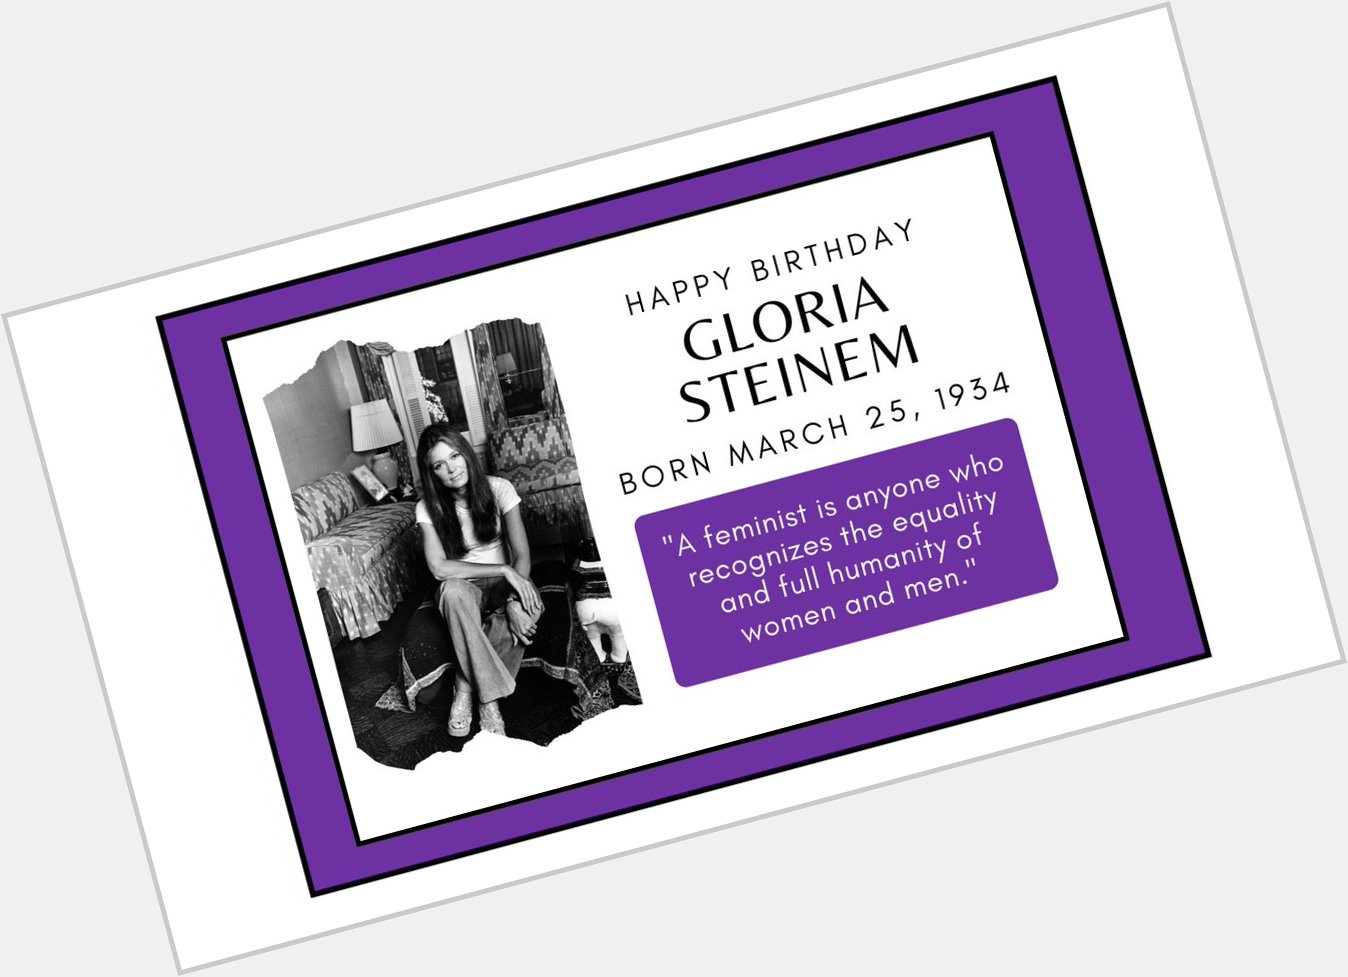 Happy birthday, Gloria Steinem!    